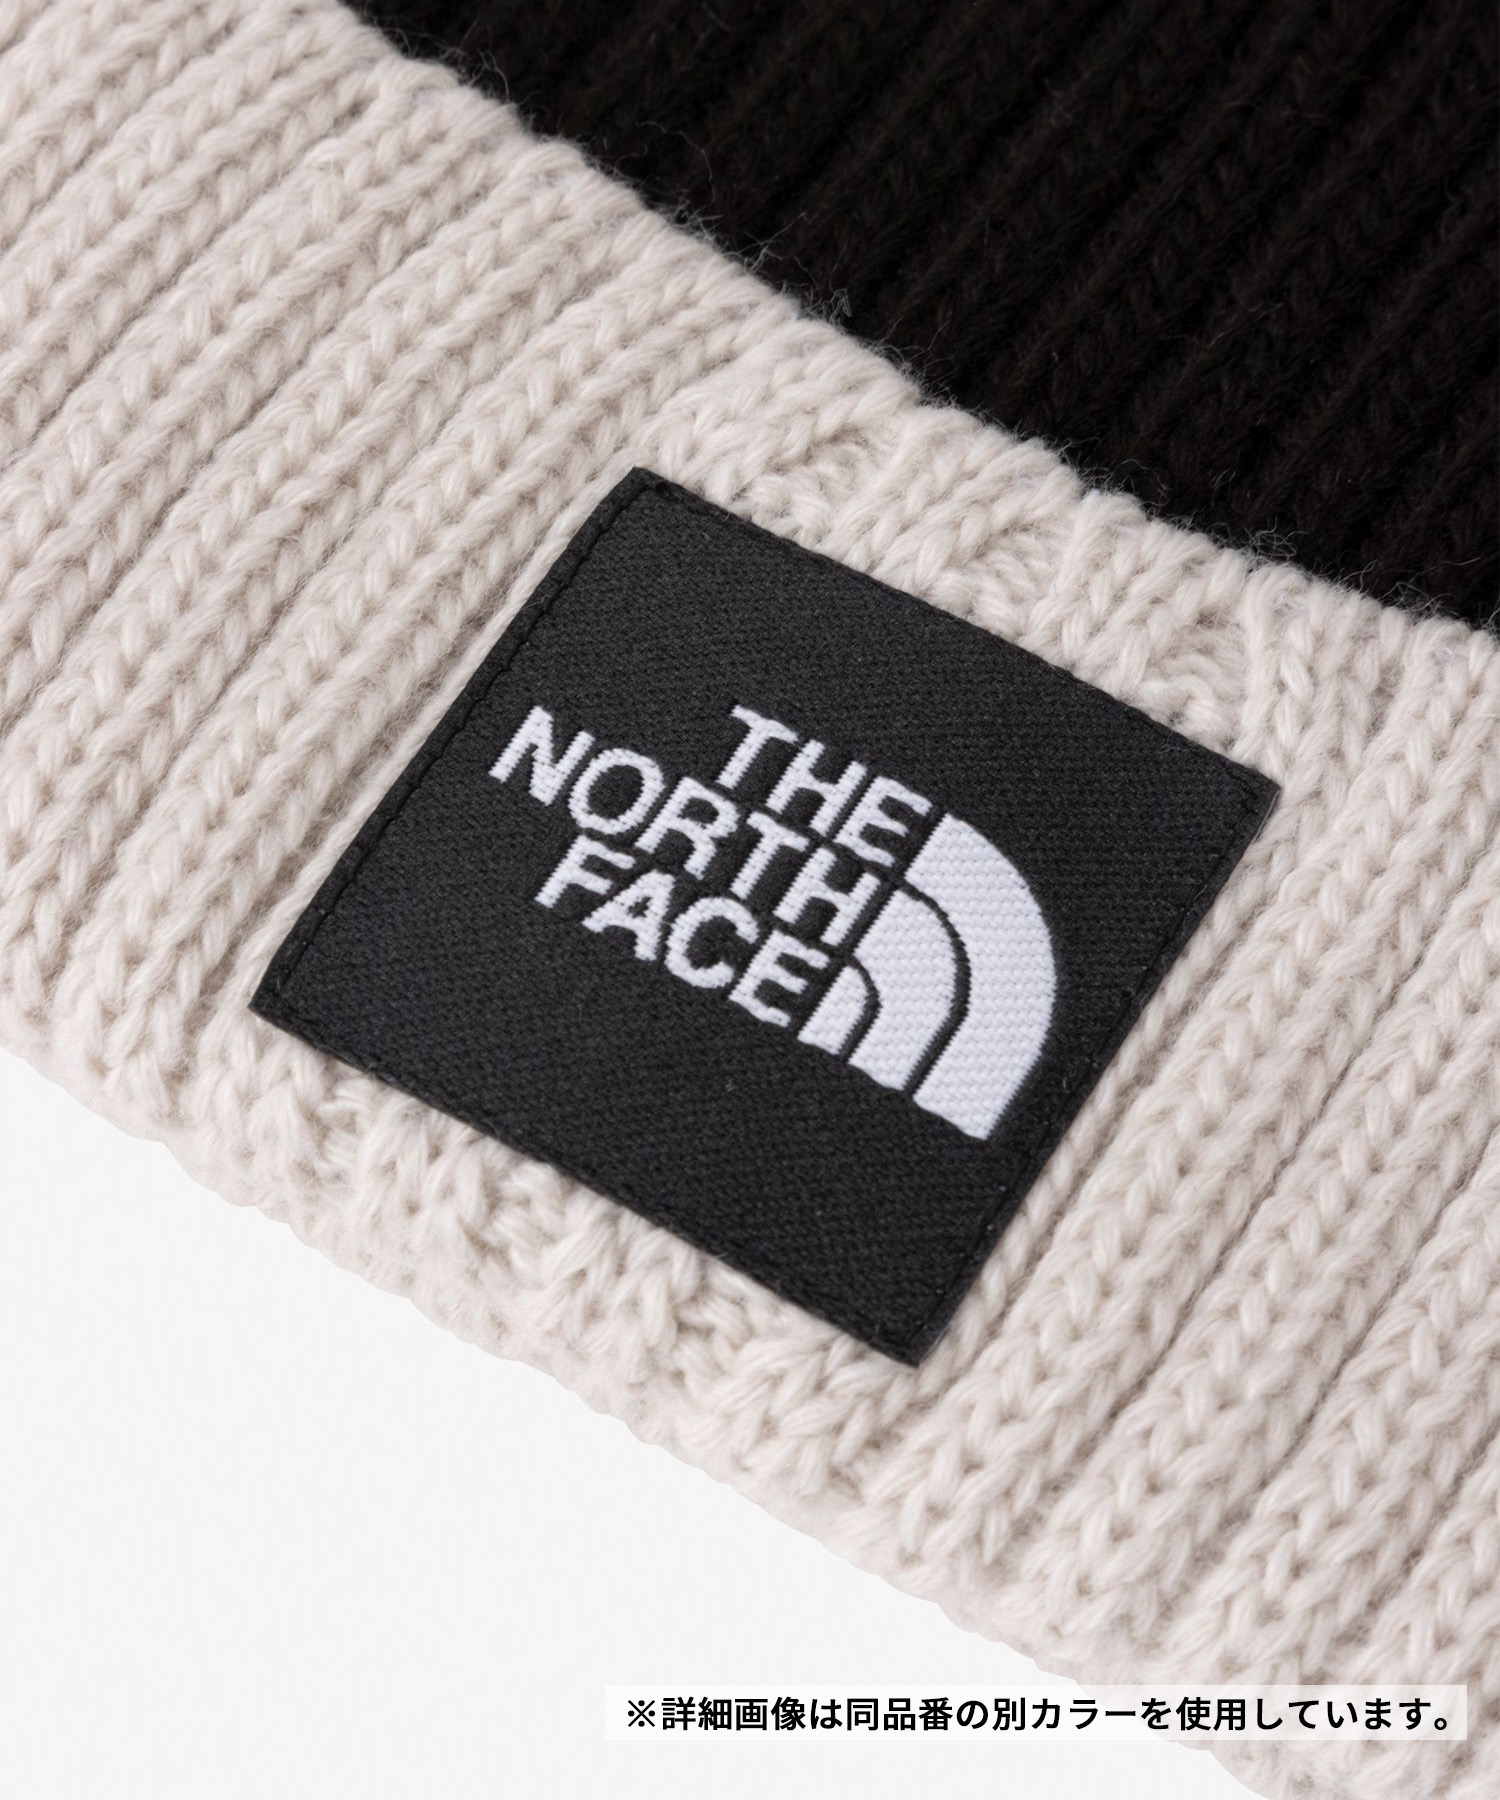 THE NORTH FACE/ザ・ノース・フェイス ポンポンカプッチョ キッズ ニットキャップ ビーニー 帽子 オーキッドピンク NNJ42307 OP(OP-FREE)